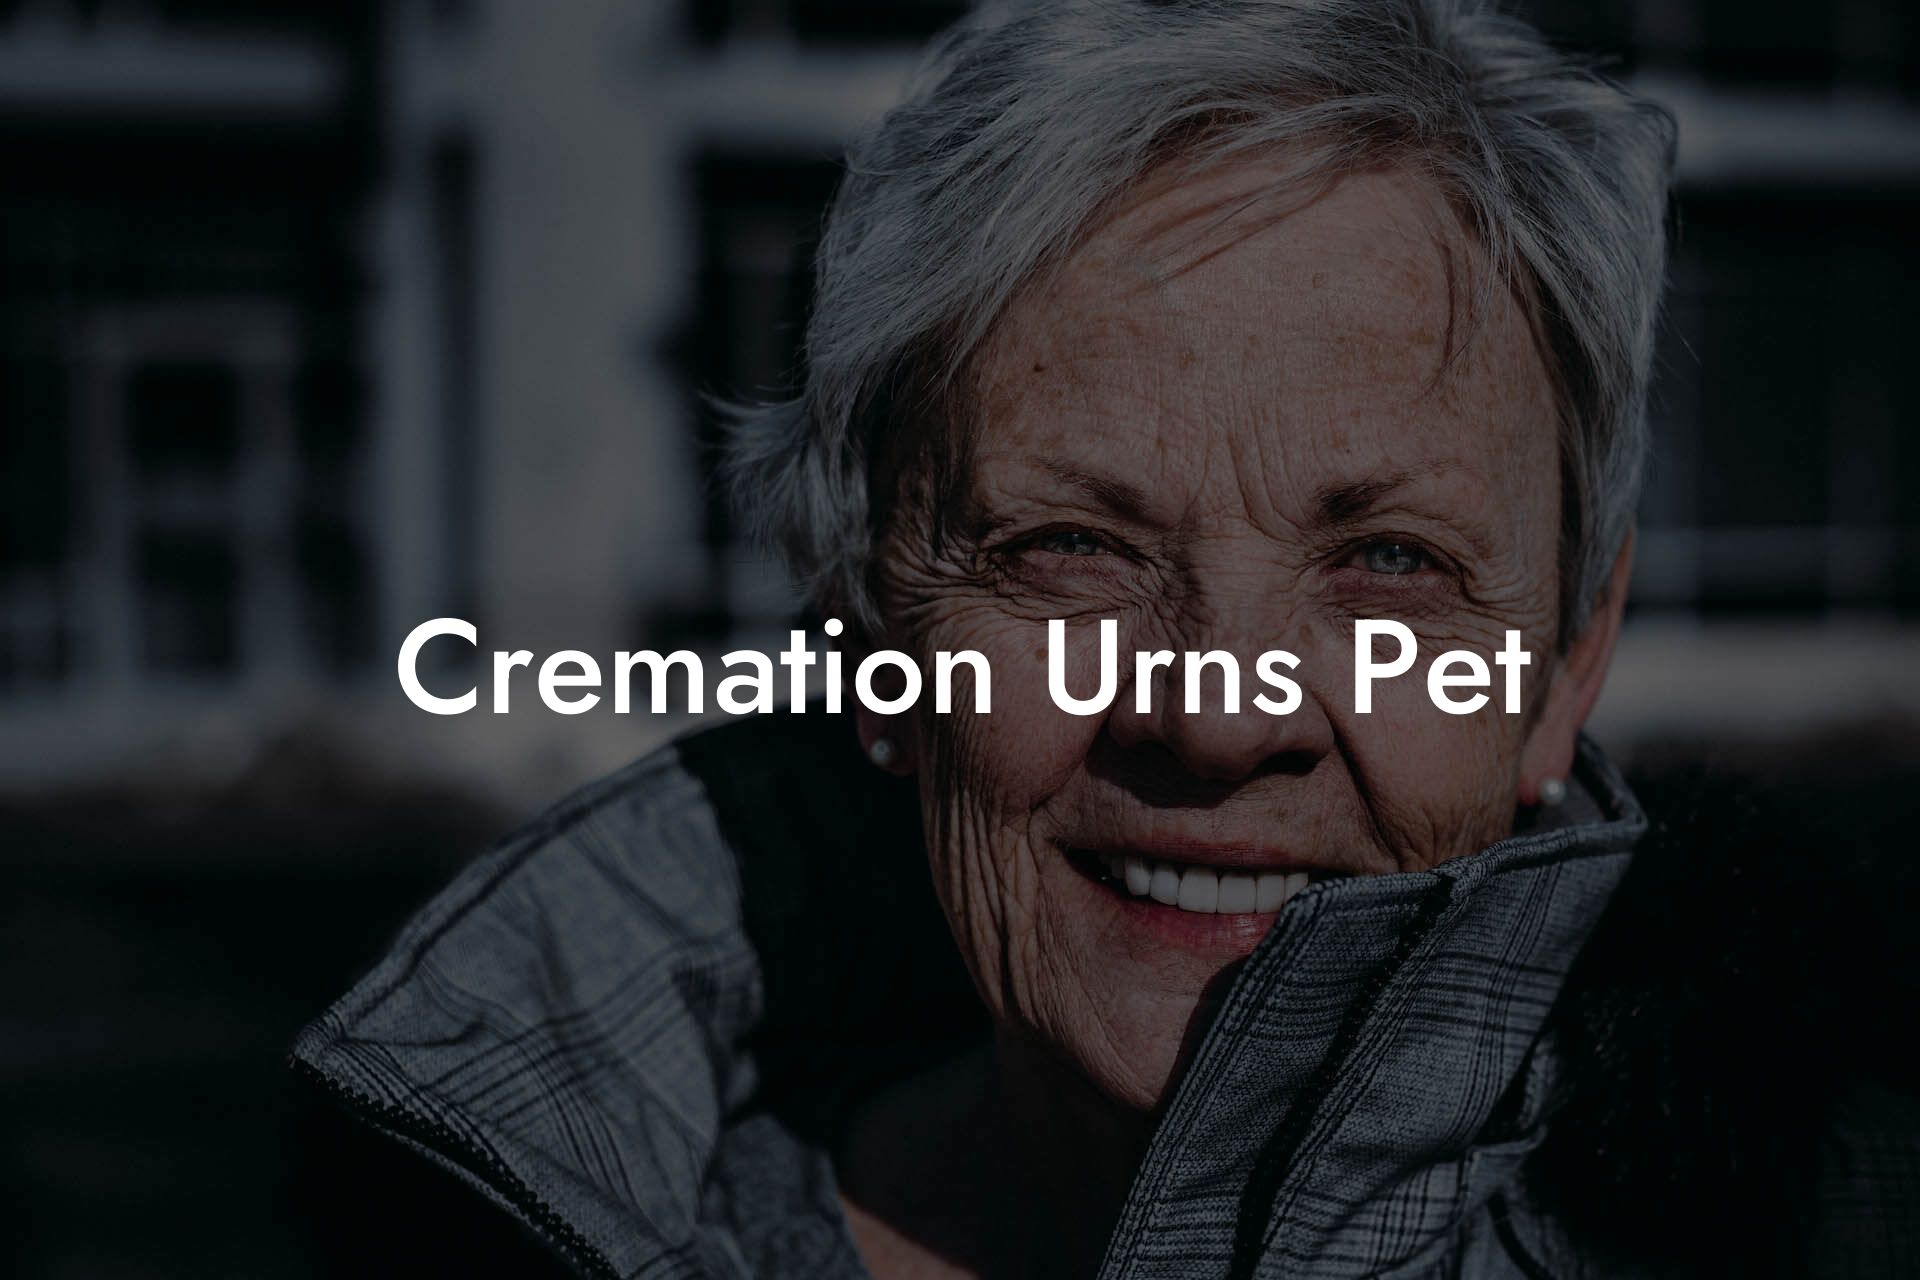 Cremation Urns Pet